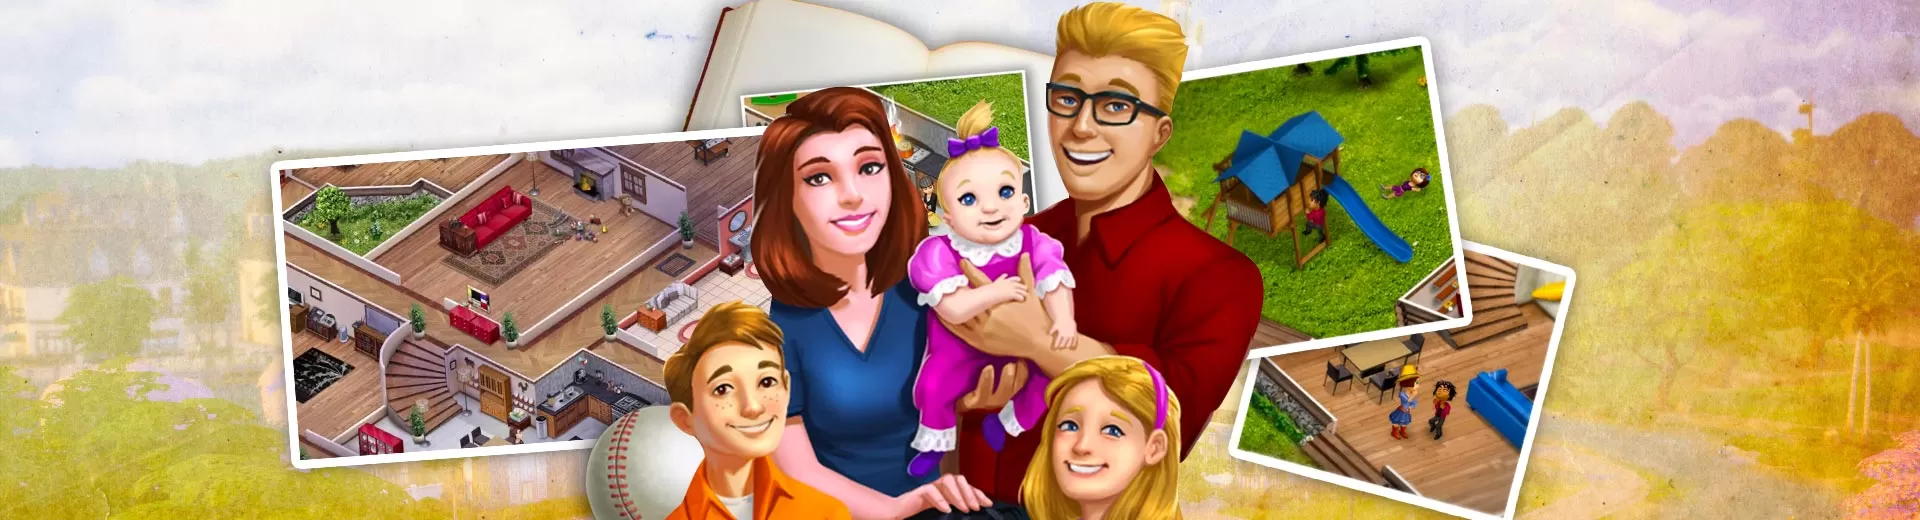 Virtual Families 3 Emulator Pc